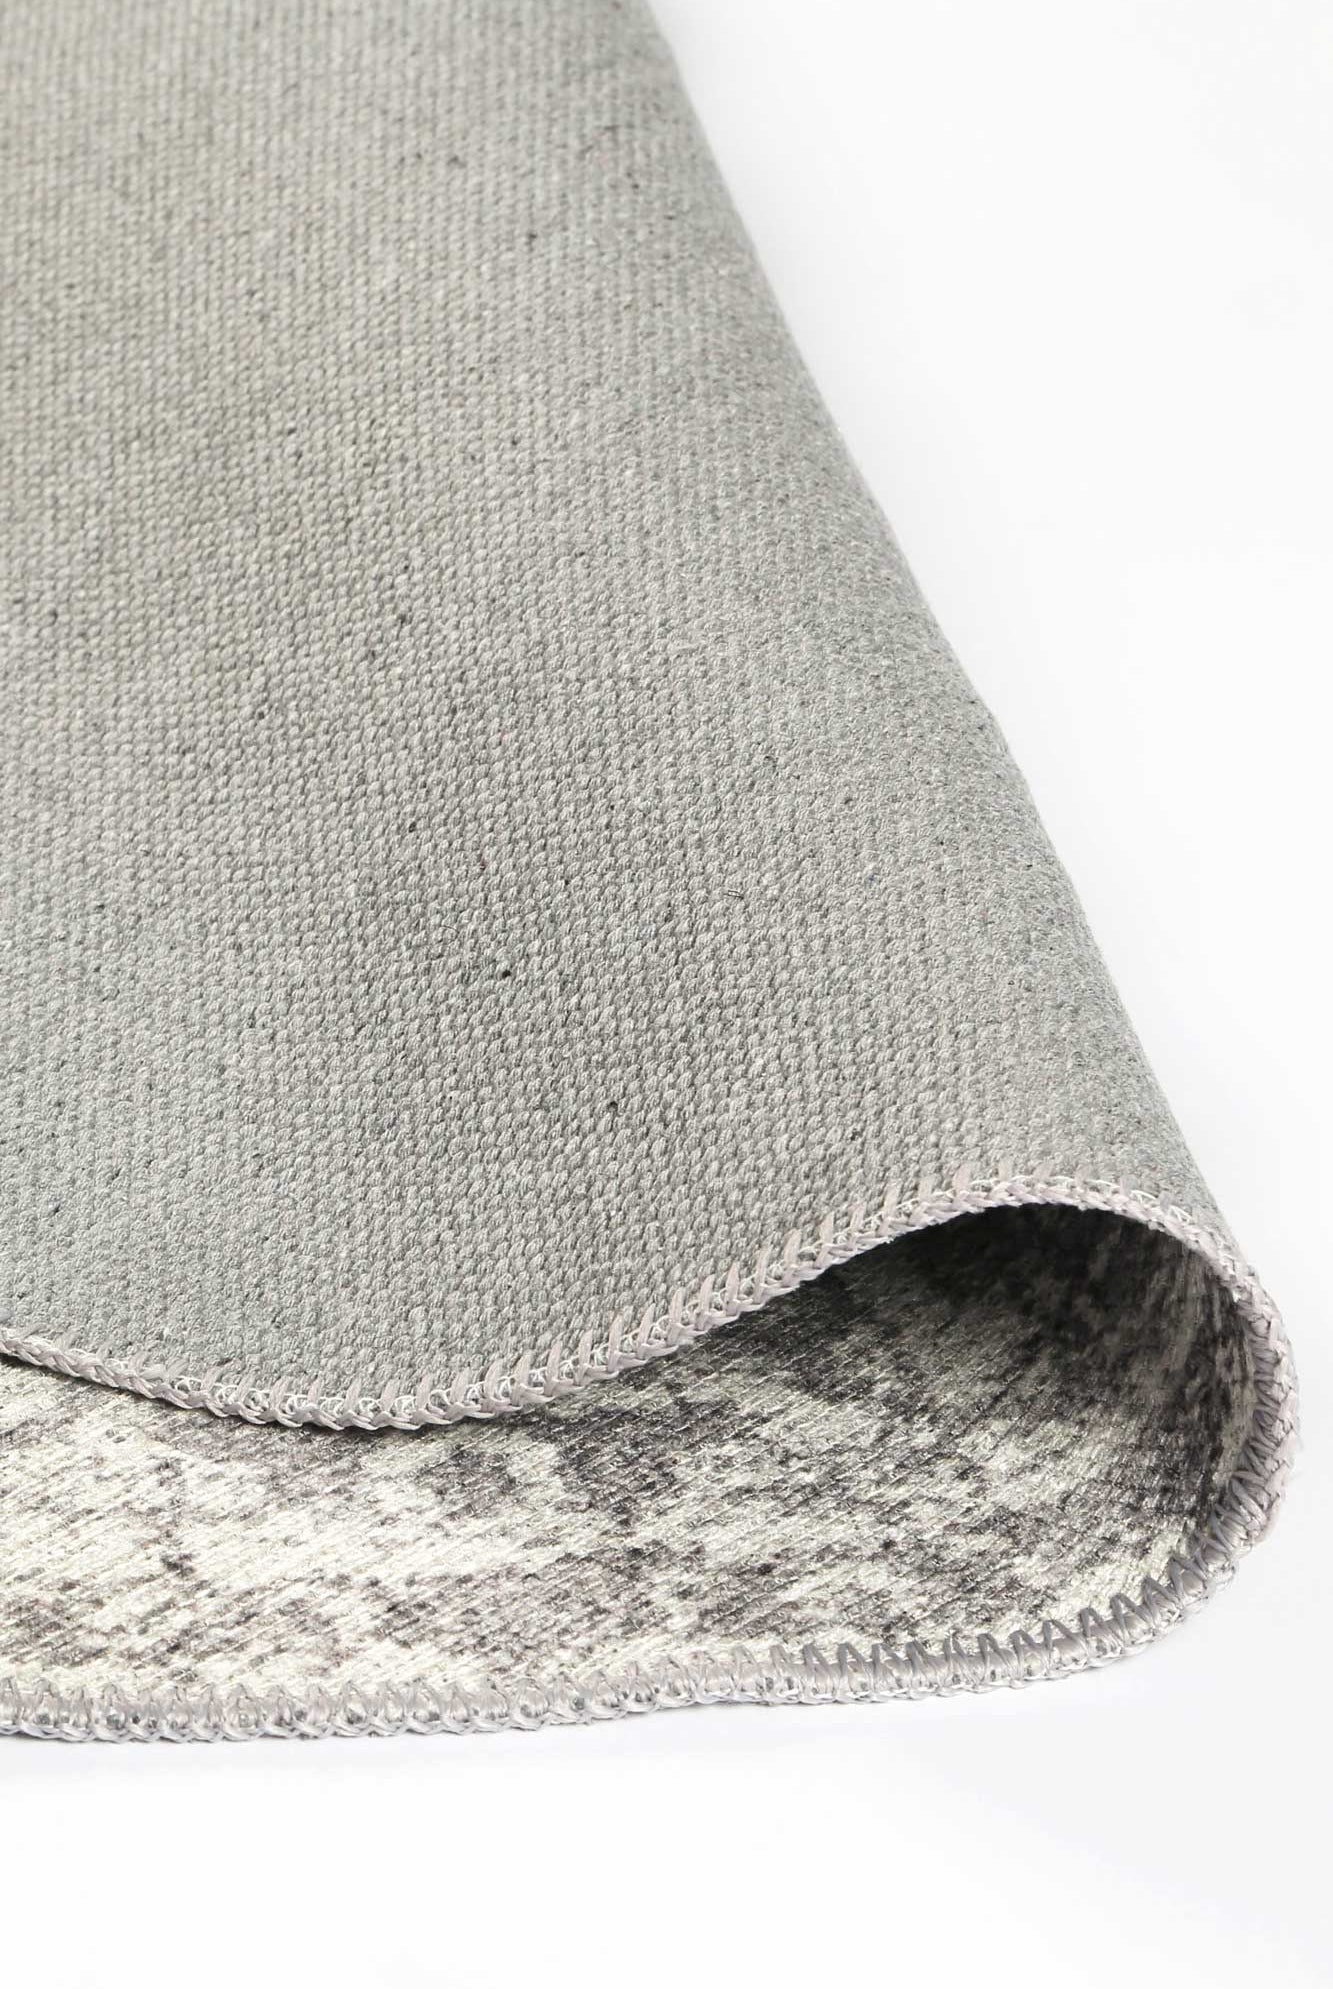 Distressed Vintage Chilaz Grey Round Rug folded